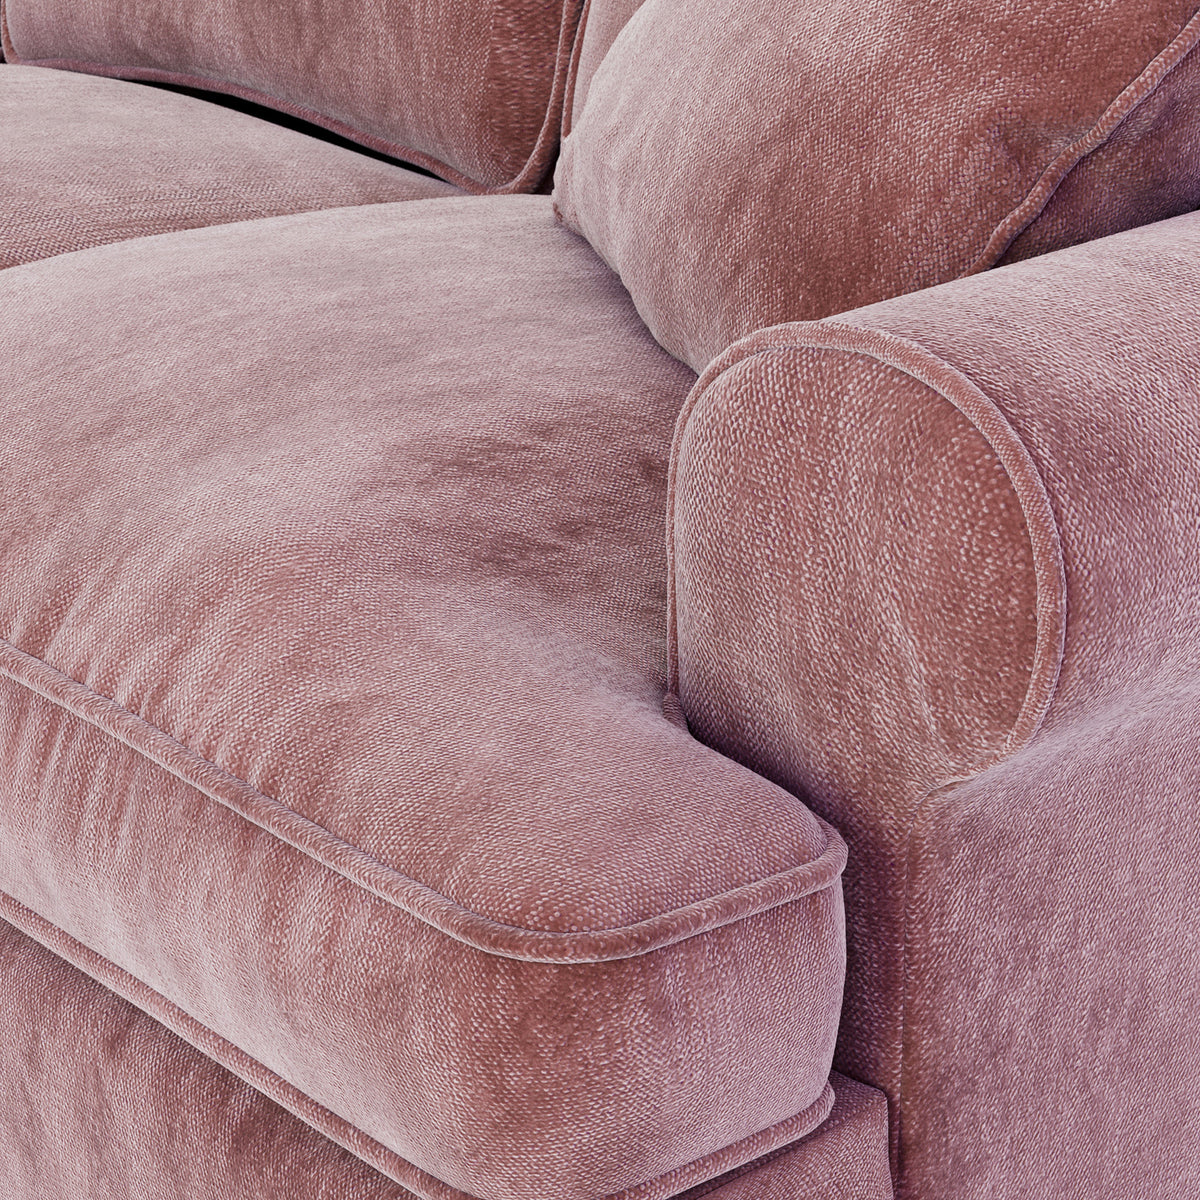 Alfie Chaise Sofa in Plum by Roseland Furniture